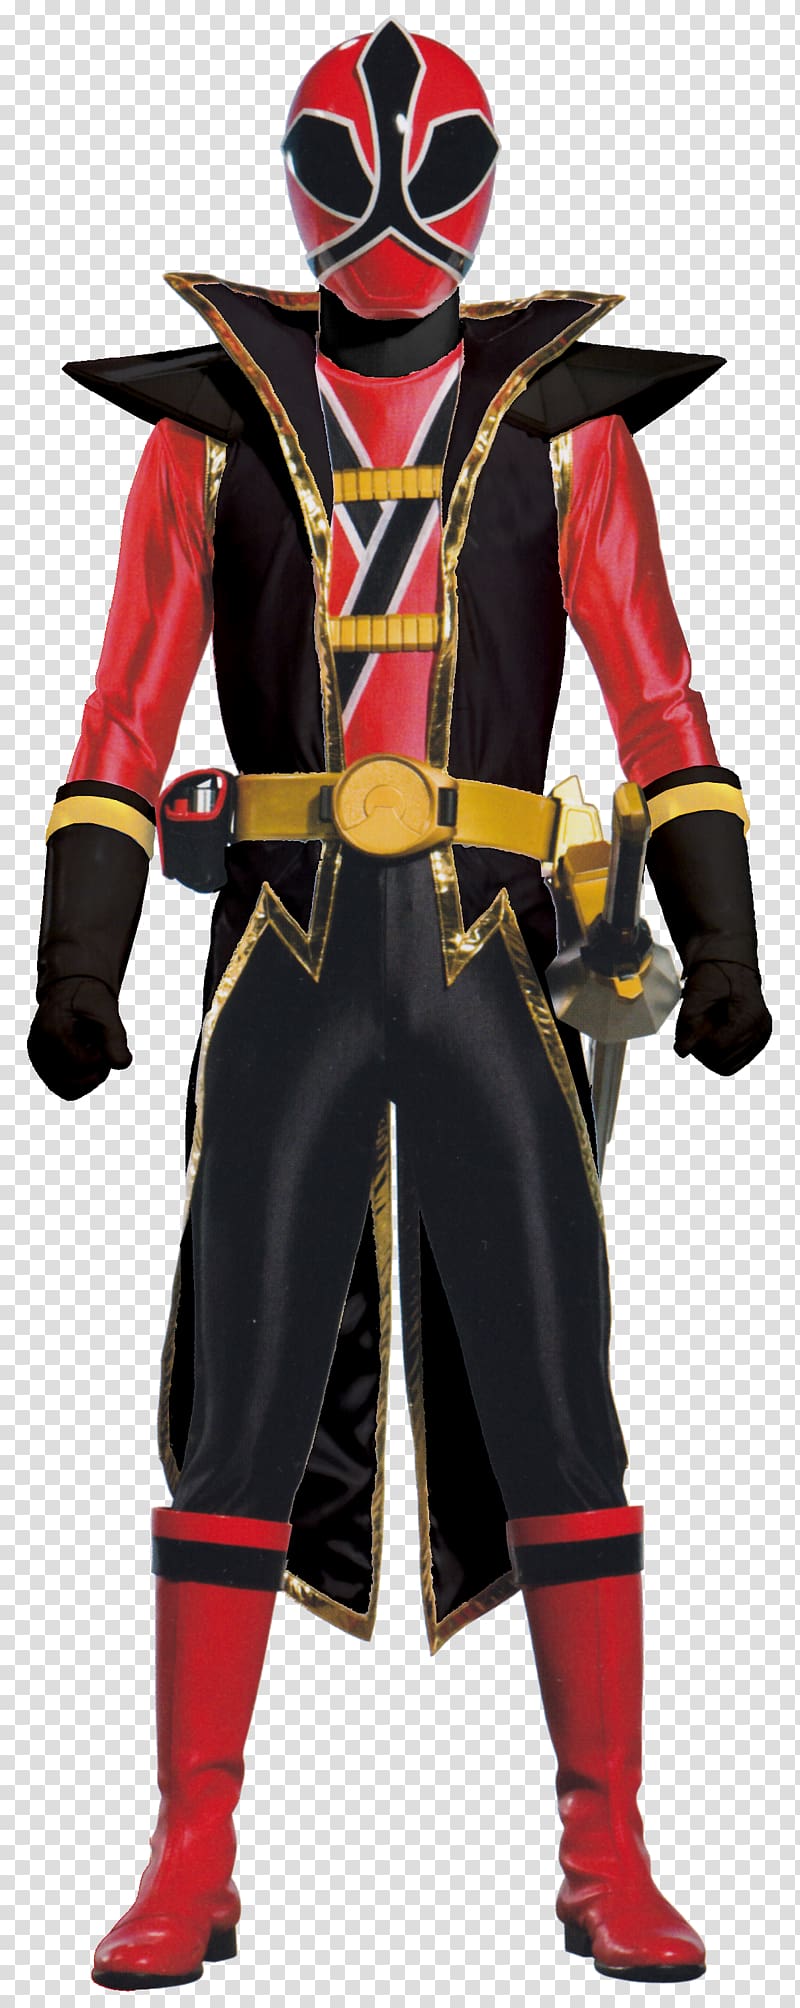 Red Ranger Power Rangers, Season 18 Takeru Shiba Super Sentai Power Rangers Ninja Steel, Power Rangers transparent background PNG clipart